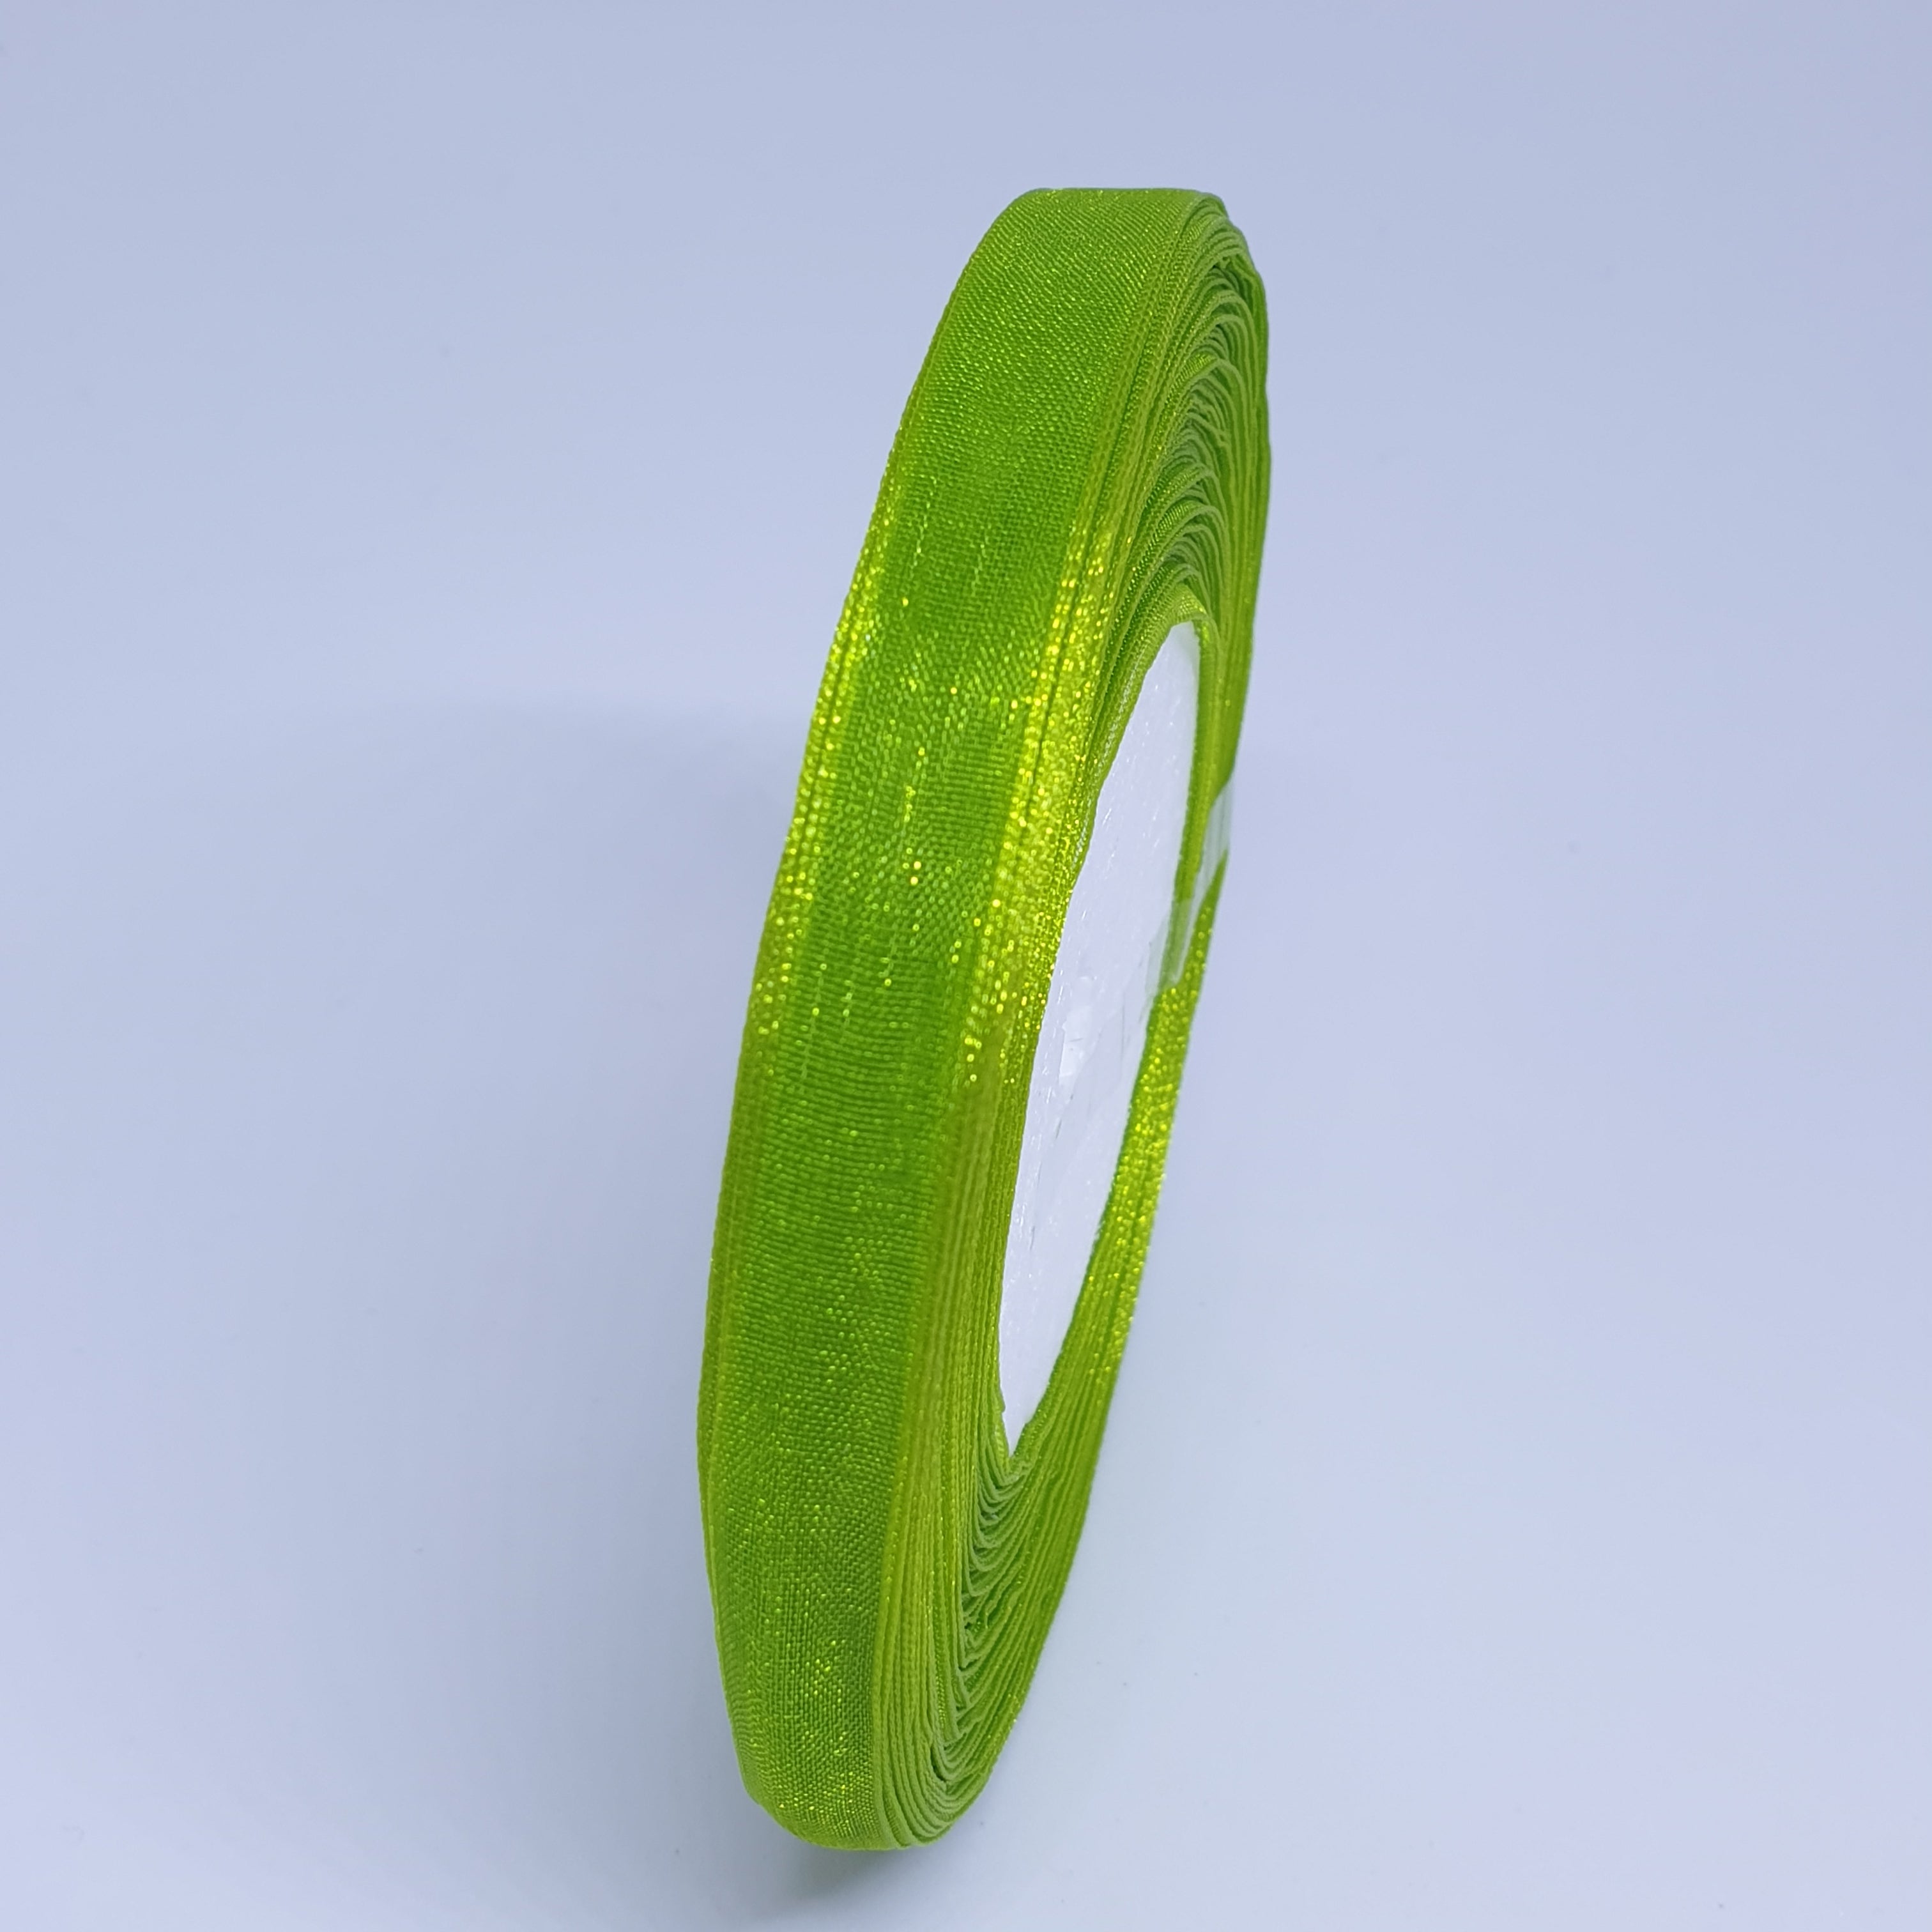 MajorCrafts 10mm 45metres Lime Green Sheer Organza Fabric Ribbon Roll R95